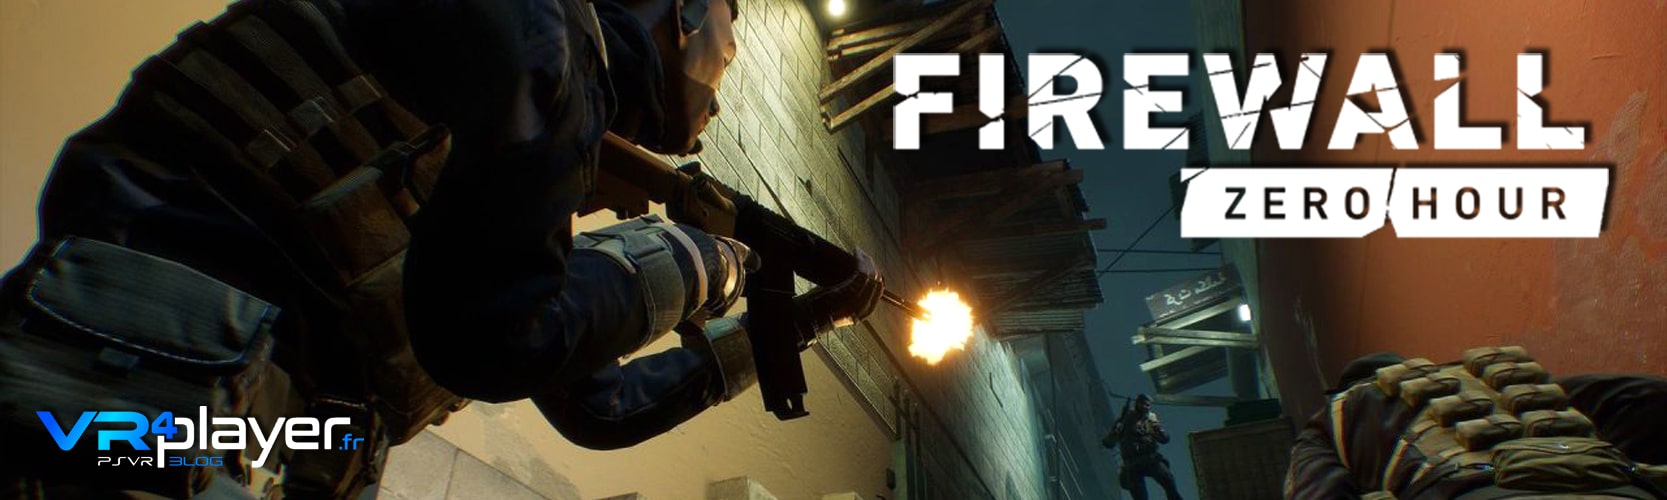 FireWall Zero Hour VR4player